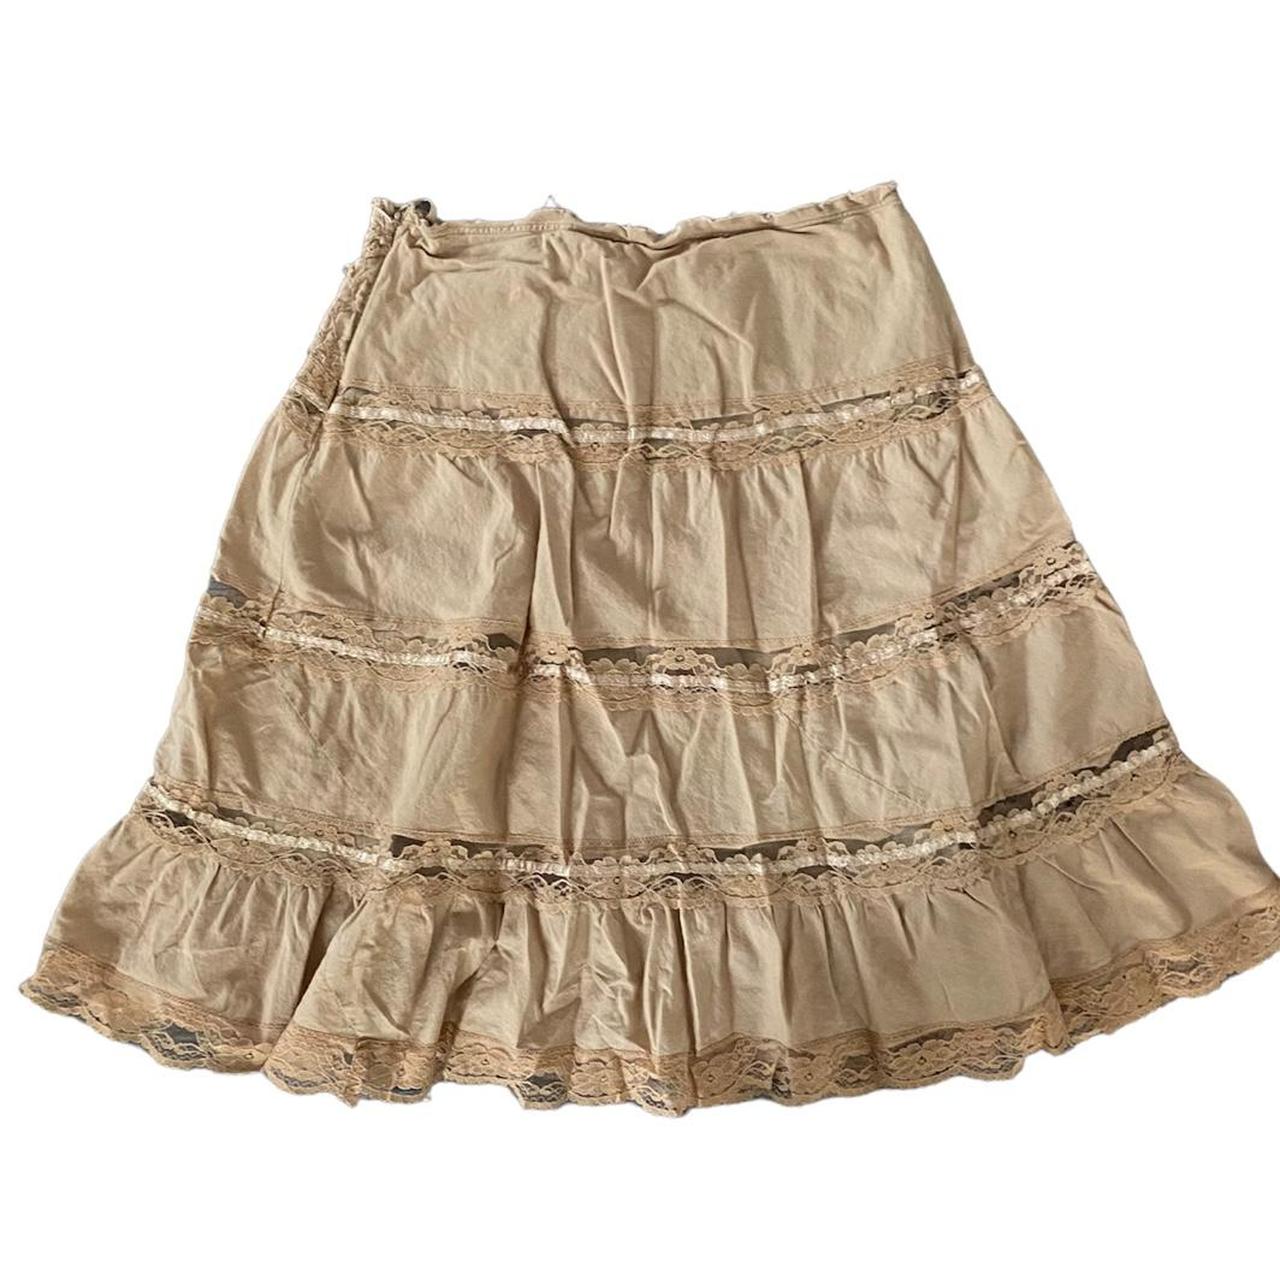 Wet Seal Women's Tan and Cream Skirt (4)